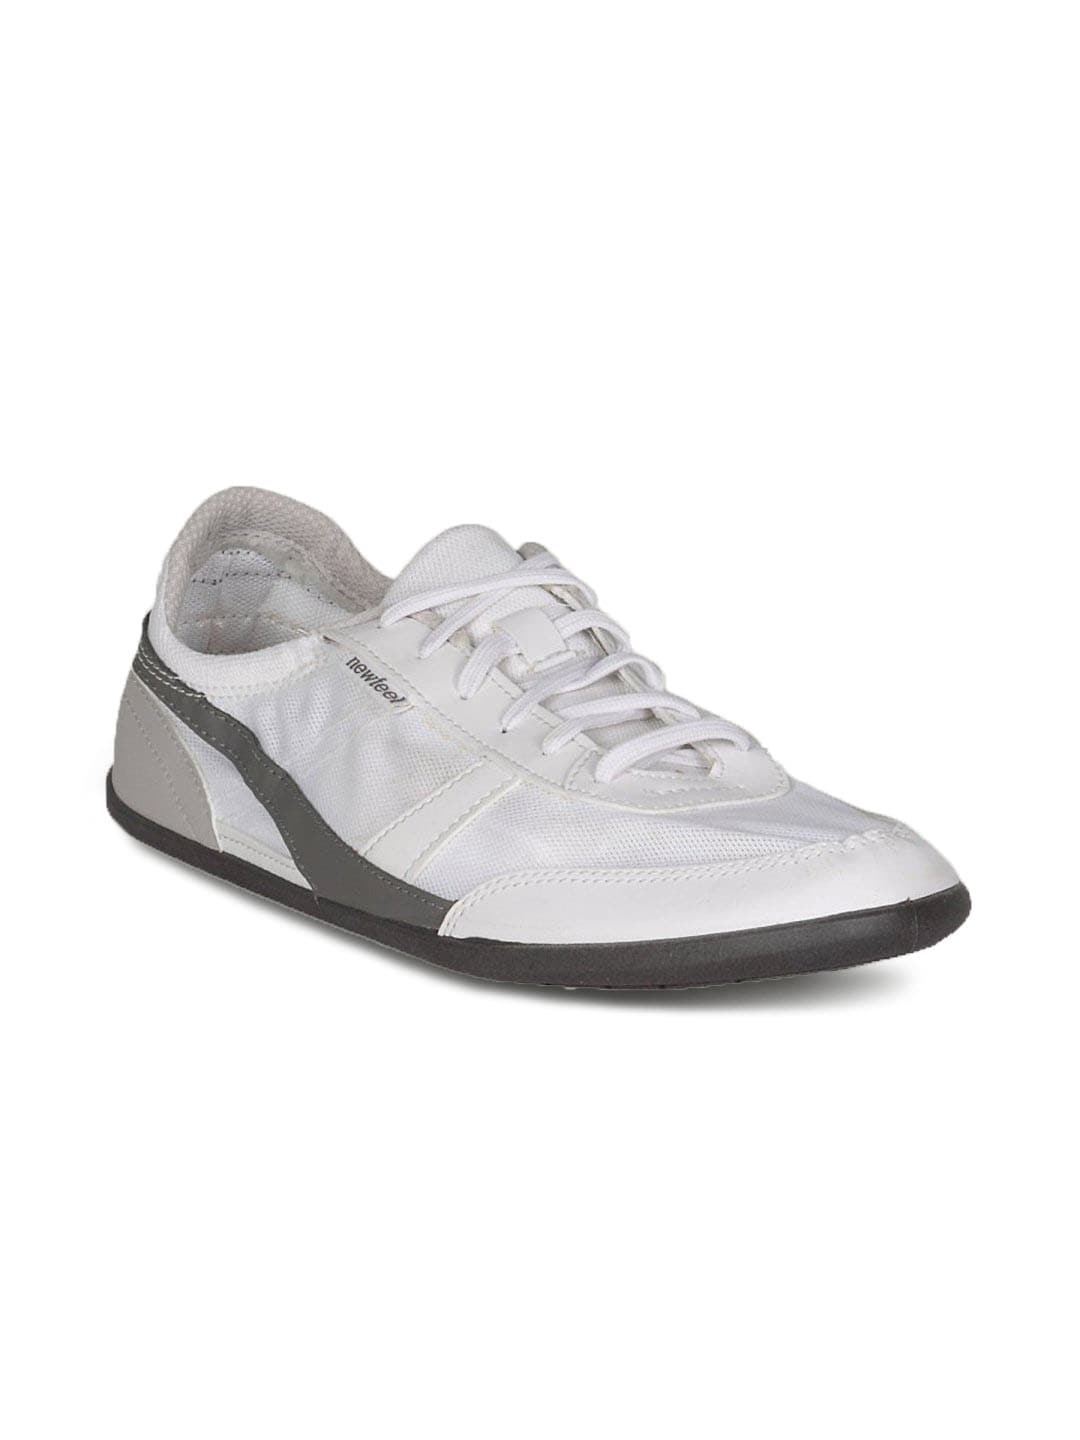 Newfeel Unisex Grey Mesh Lightweight Shoe